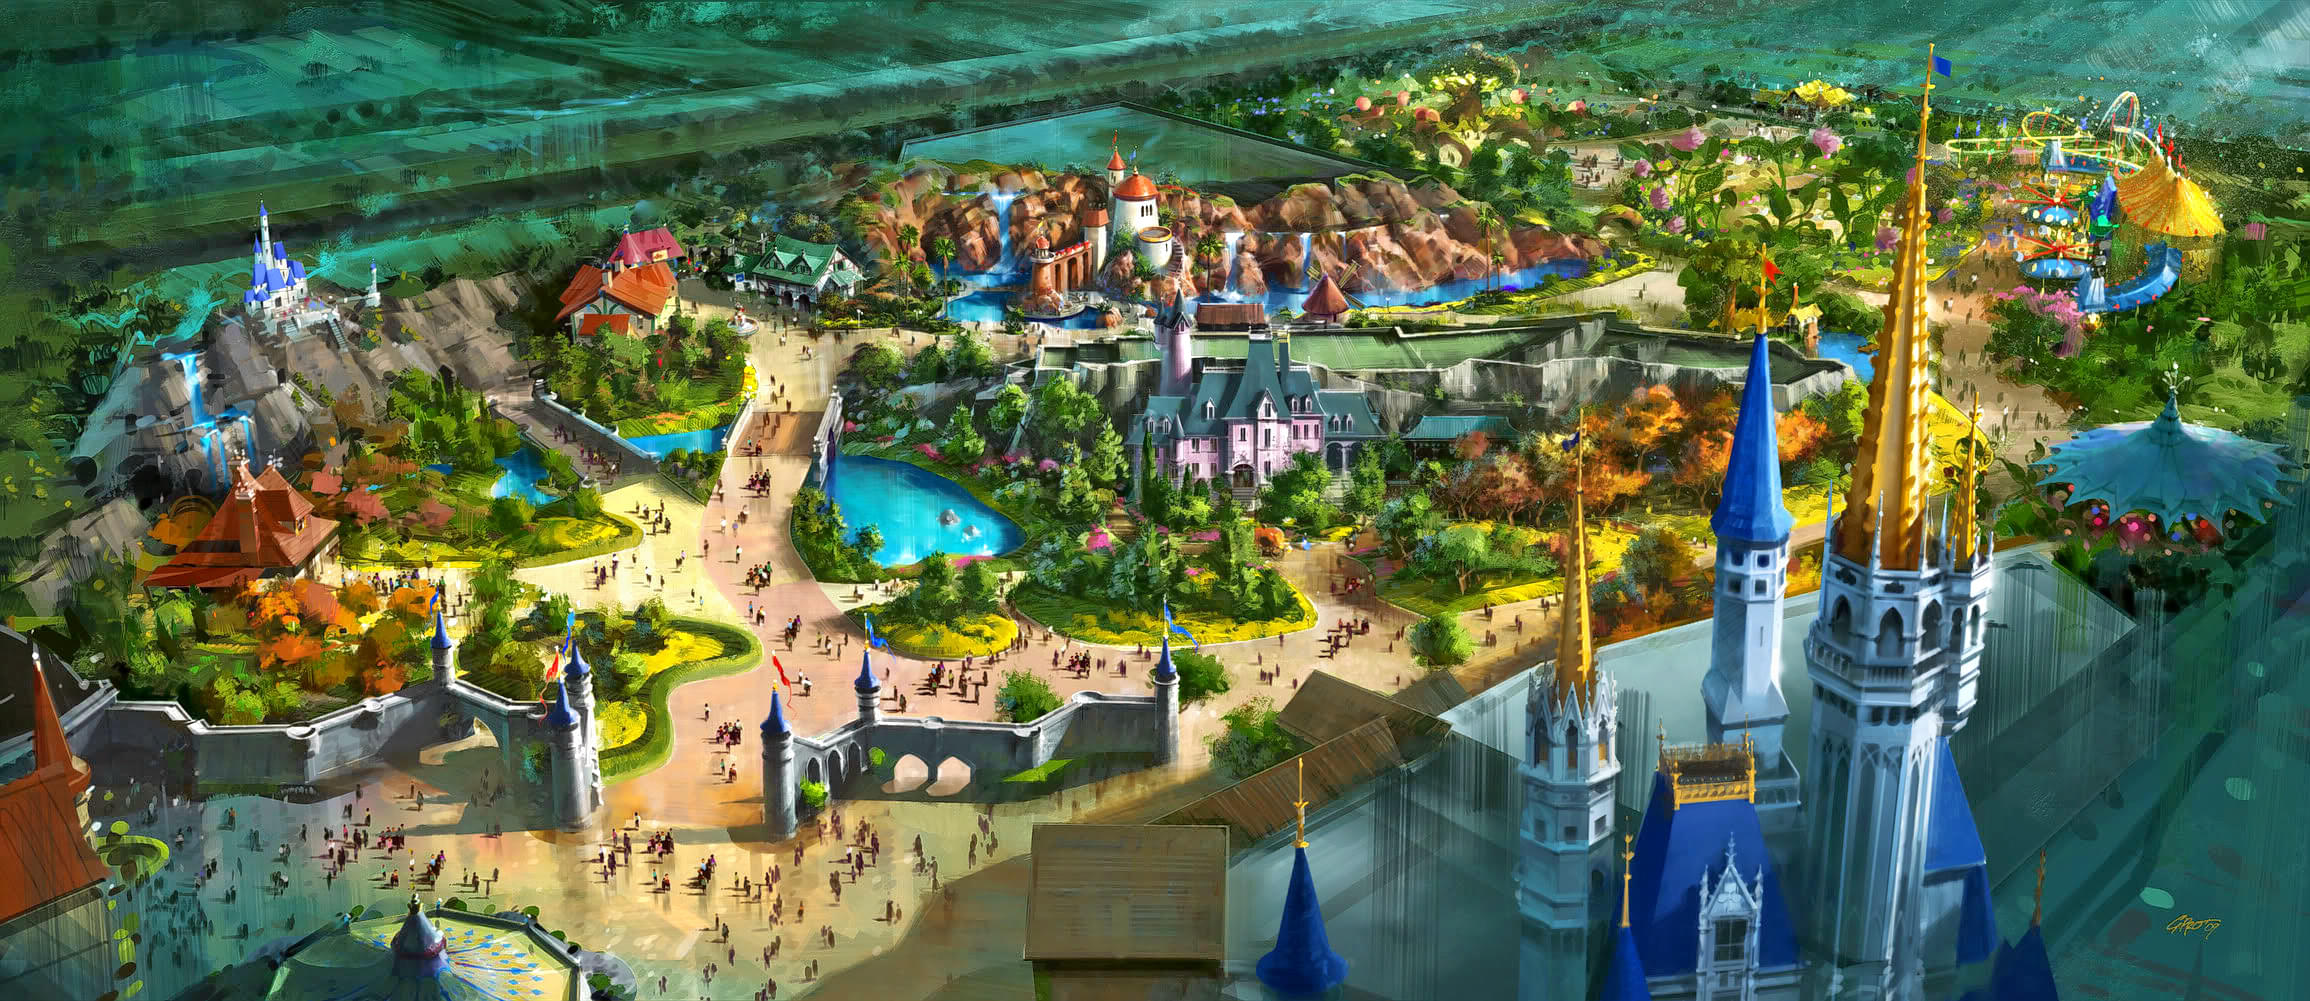 Fantasy Kingdom Overview